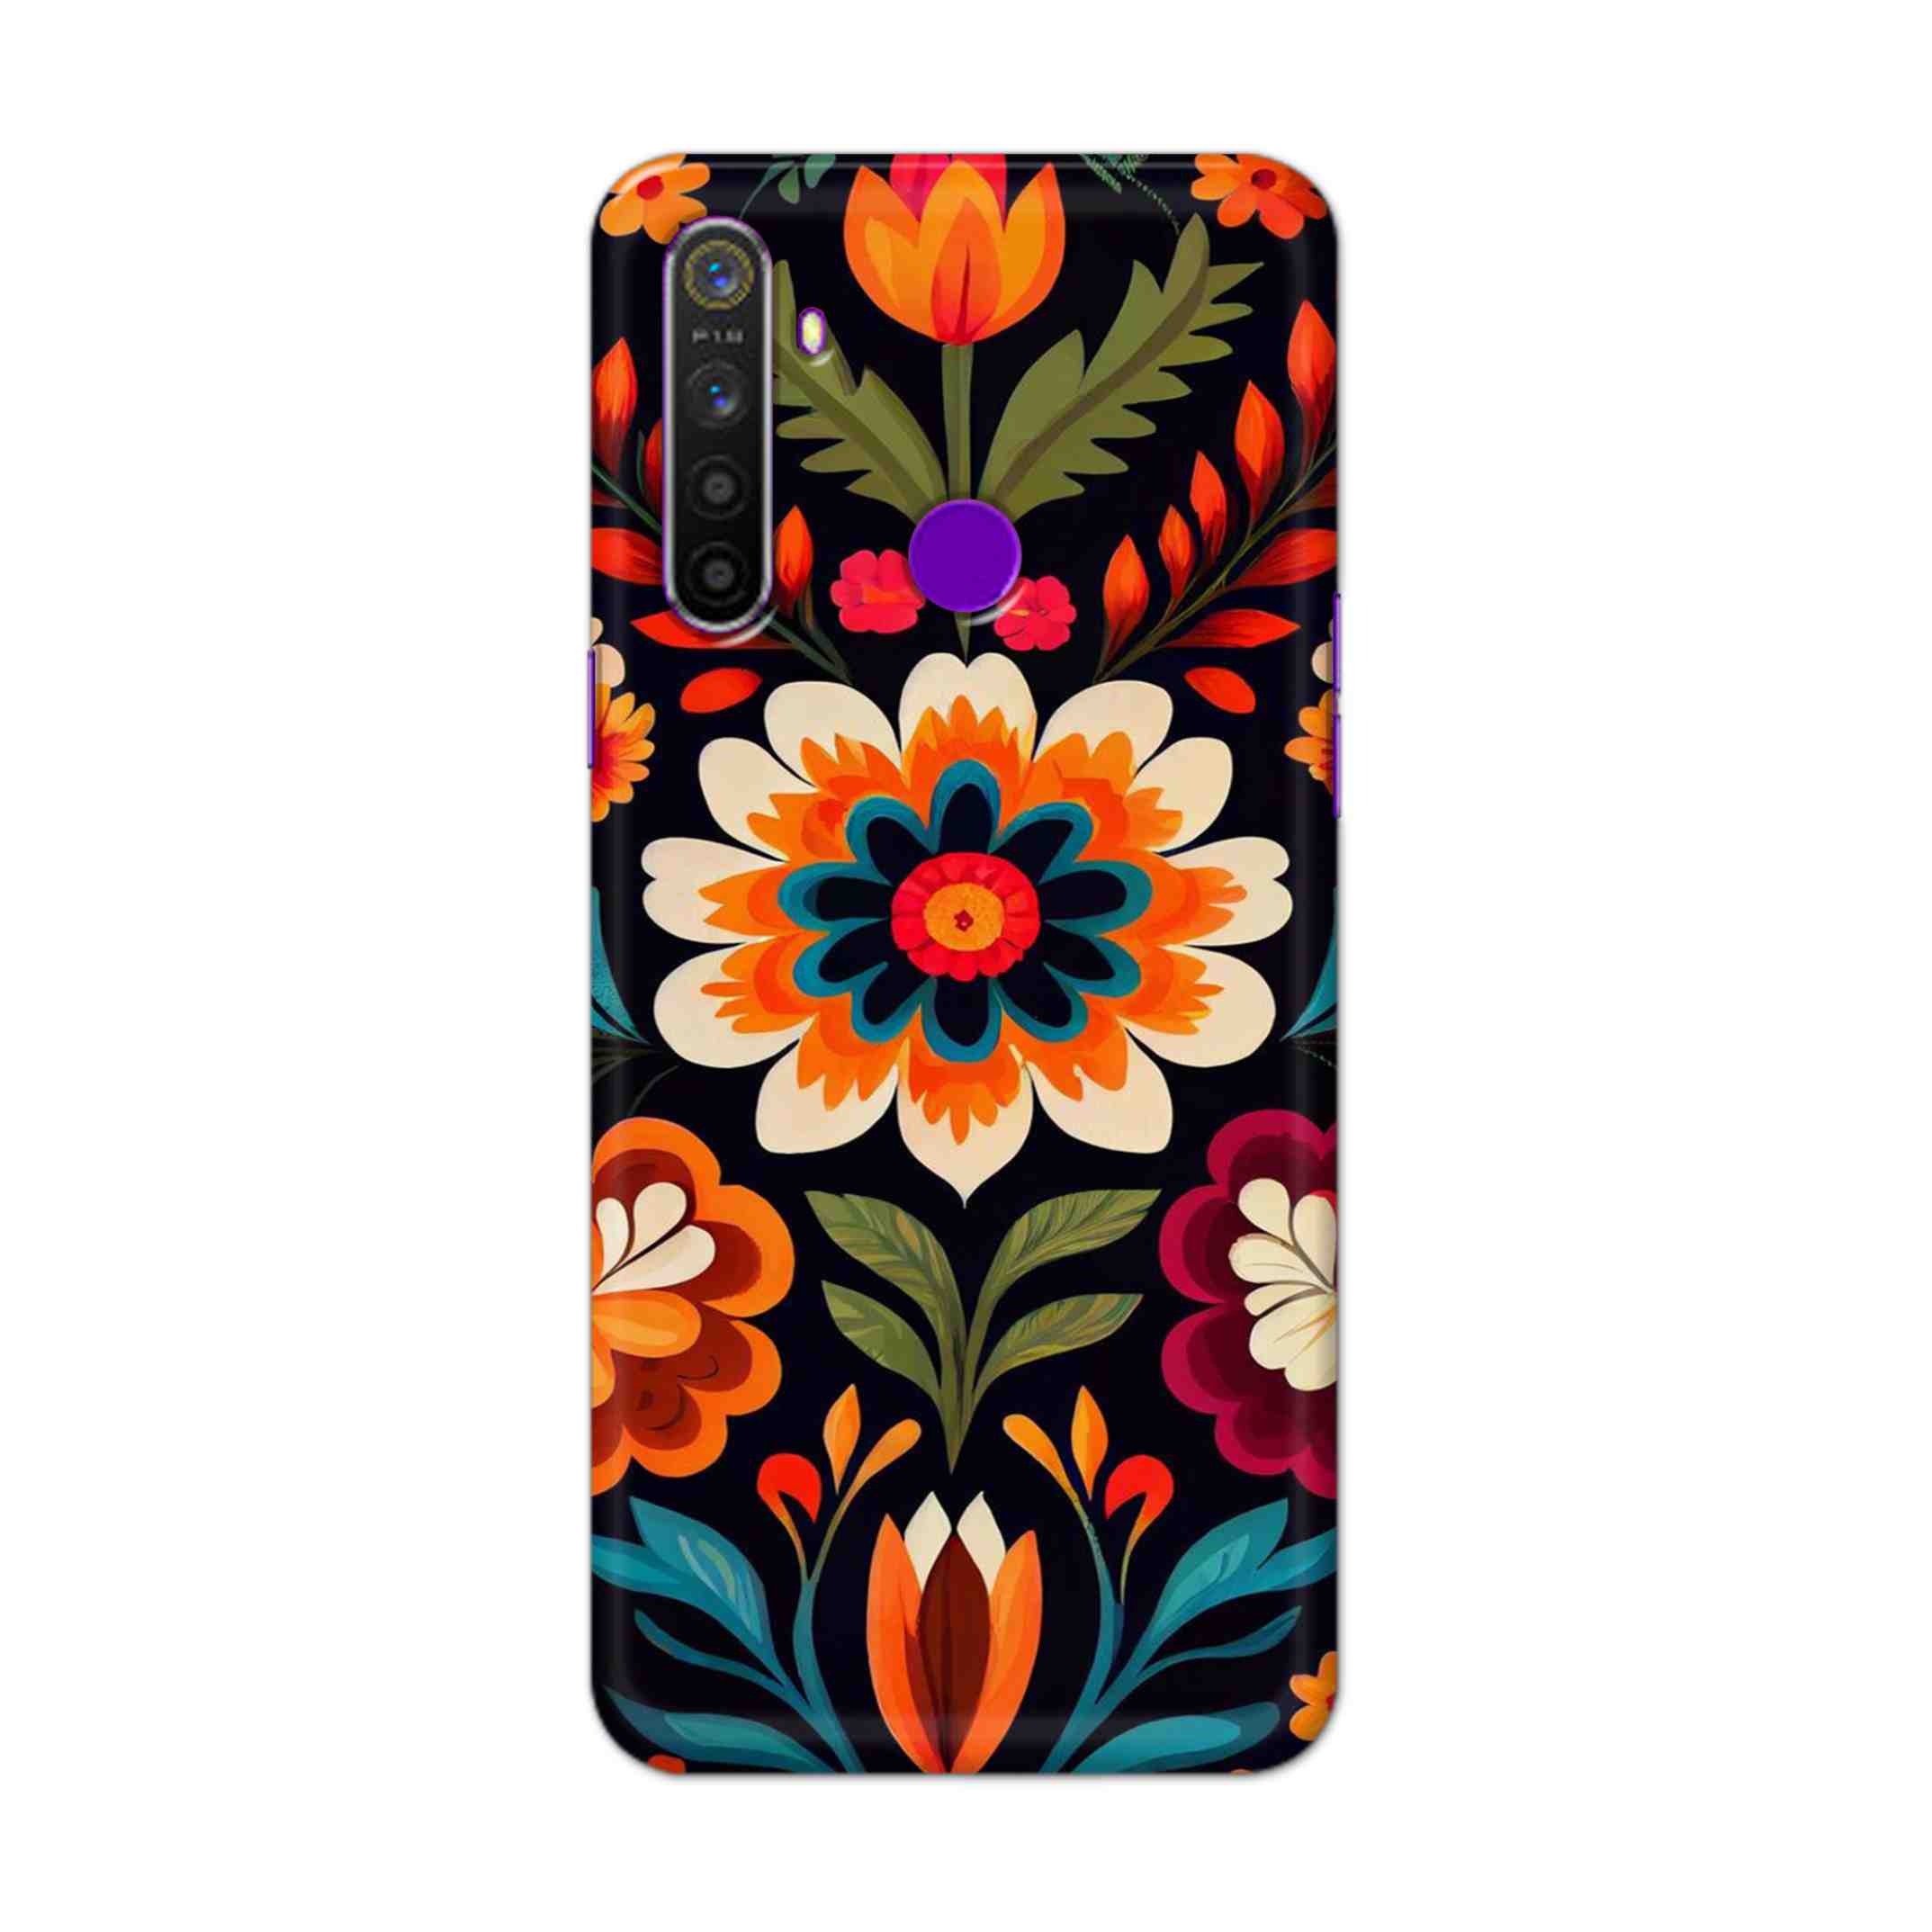 Buy Flower Hard Back Mobile Phone Case Cover For Realme 5 Pro Online